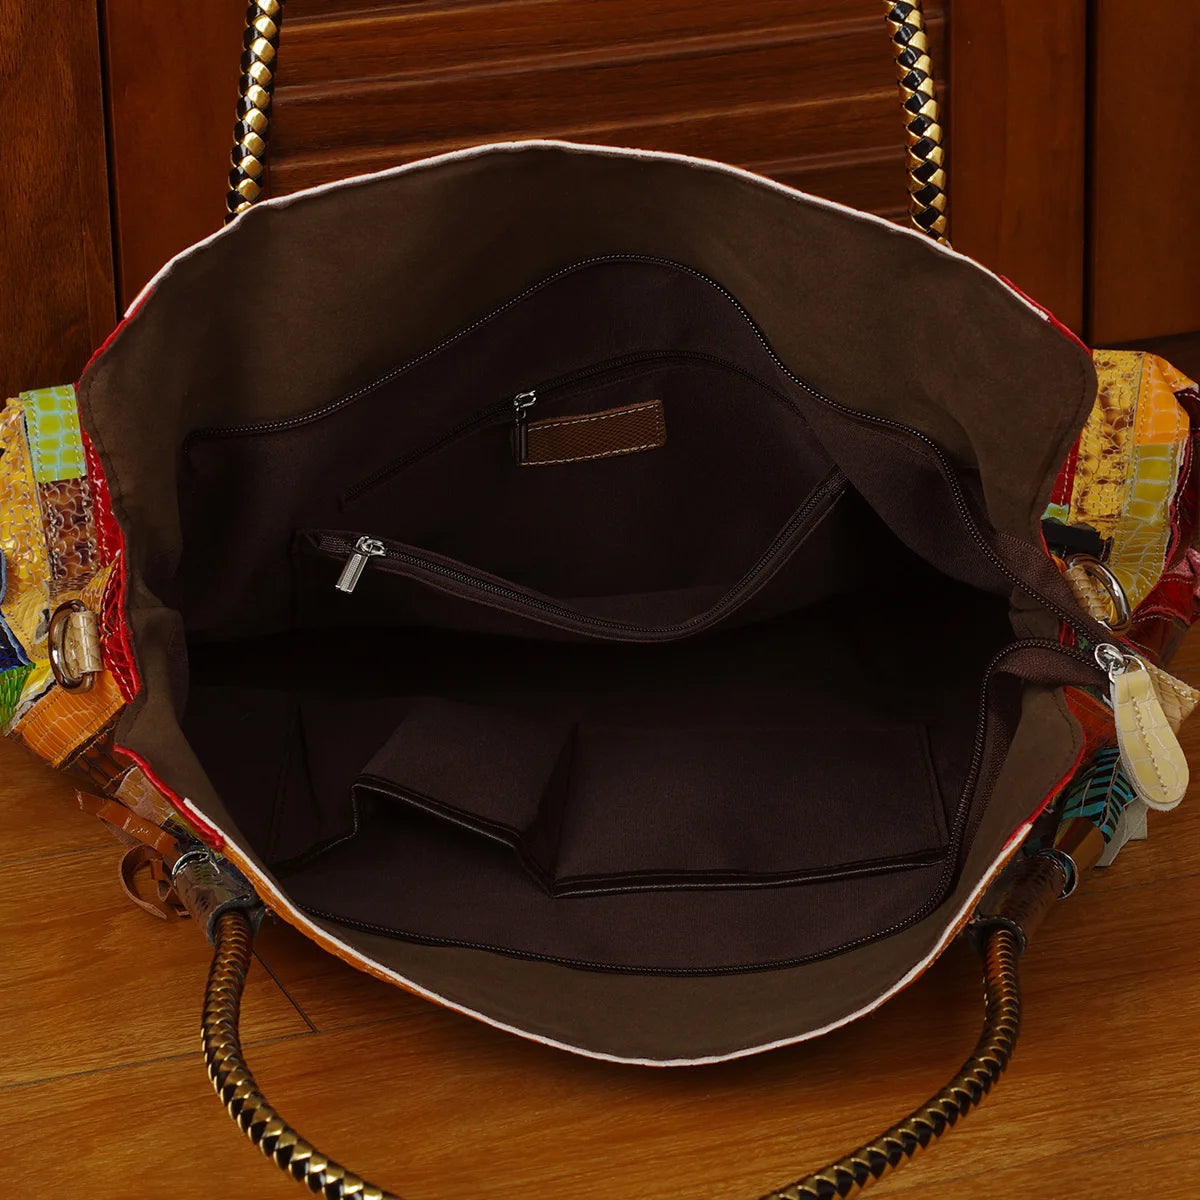 Leather Fringe Stripes Handbags